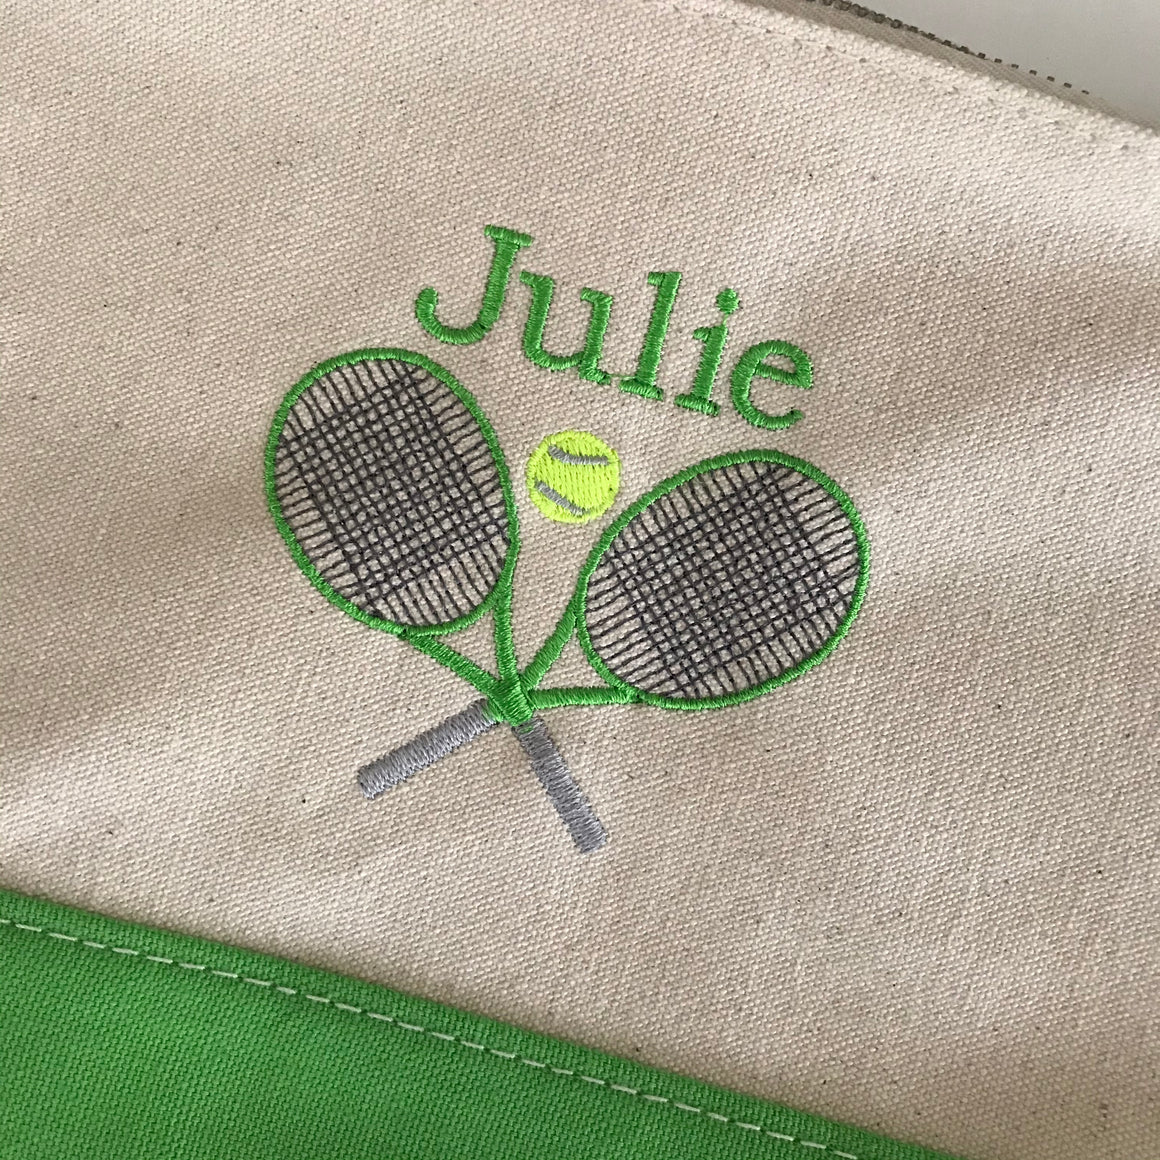 Classic Canvas Tennis Cosmetic Bag